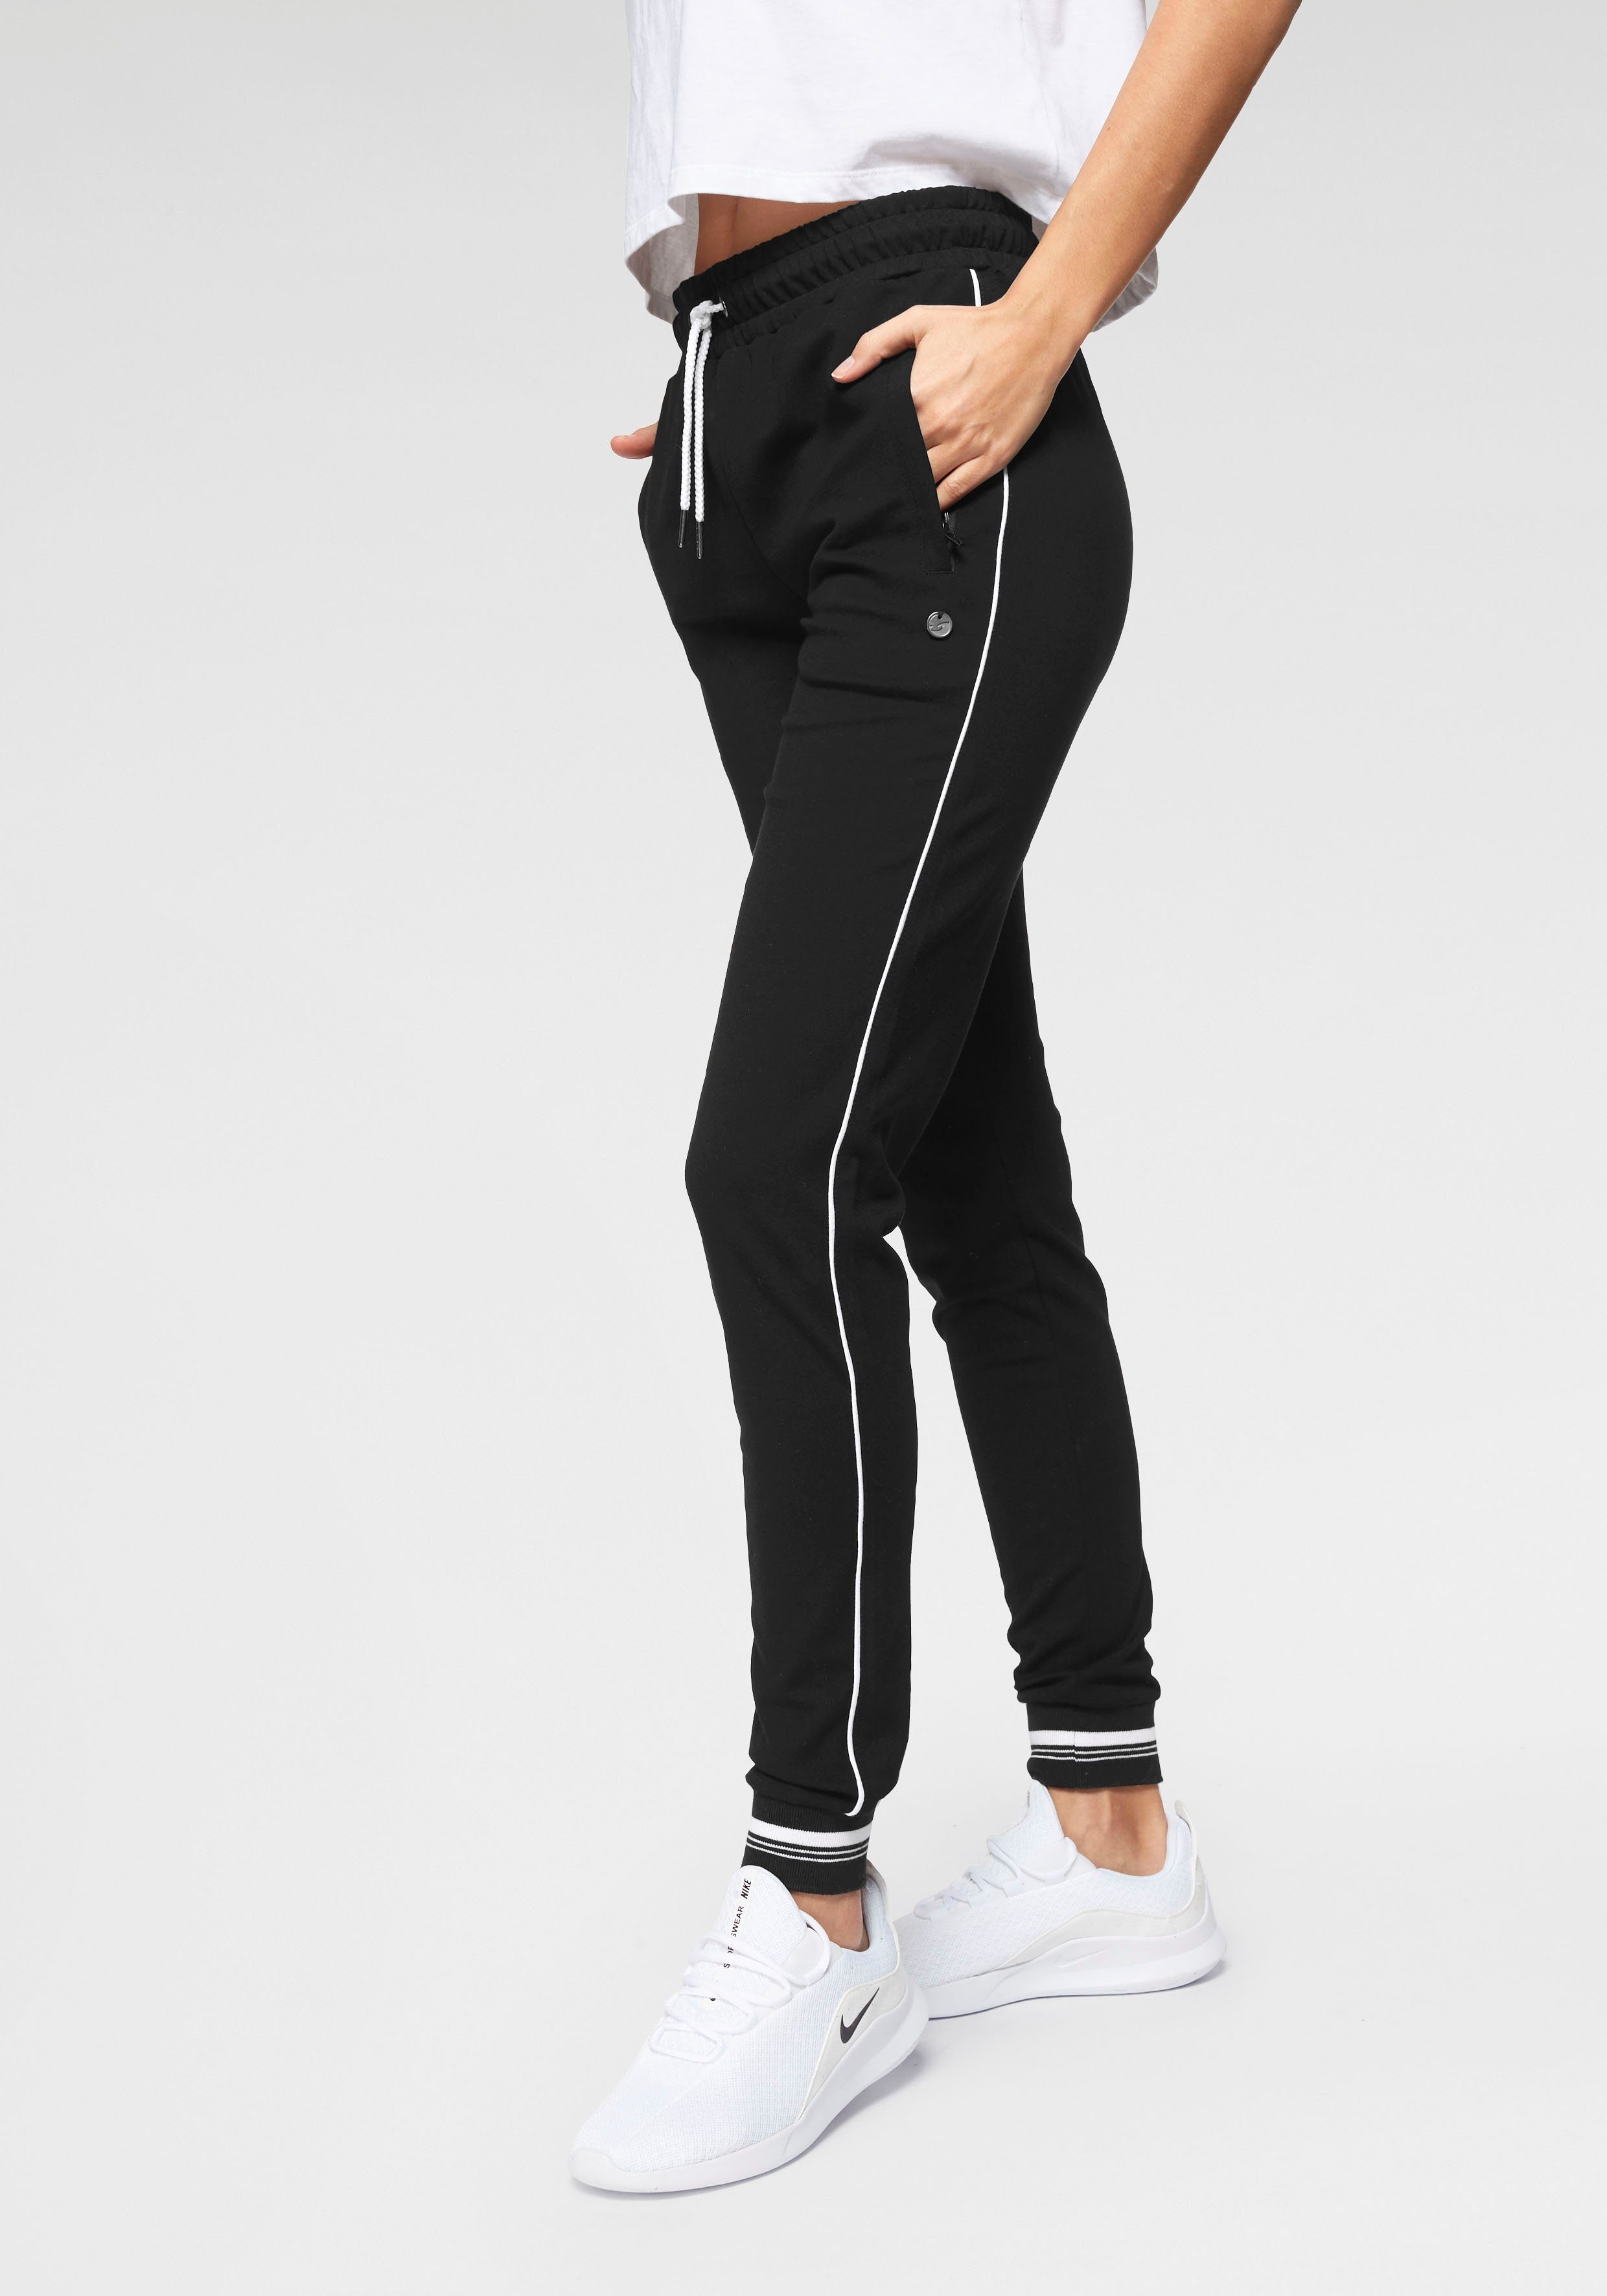 Paspeln Jogginghose Comfort Ocean Fit mit seitlichen Sportswear